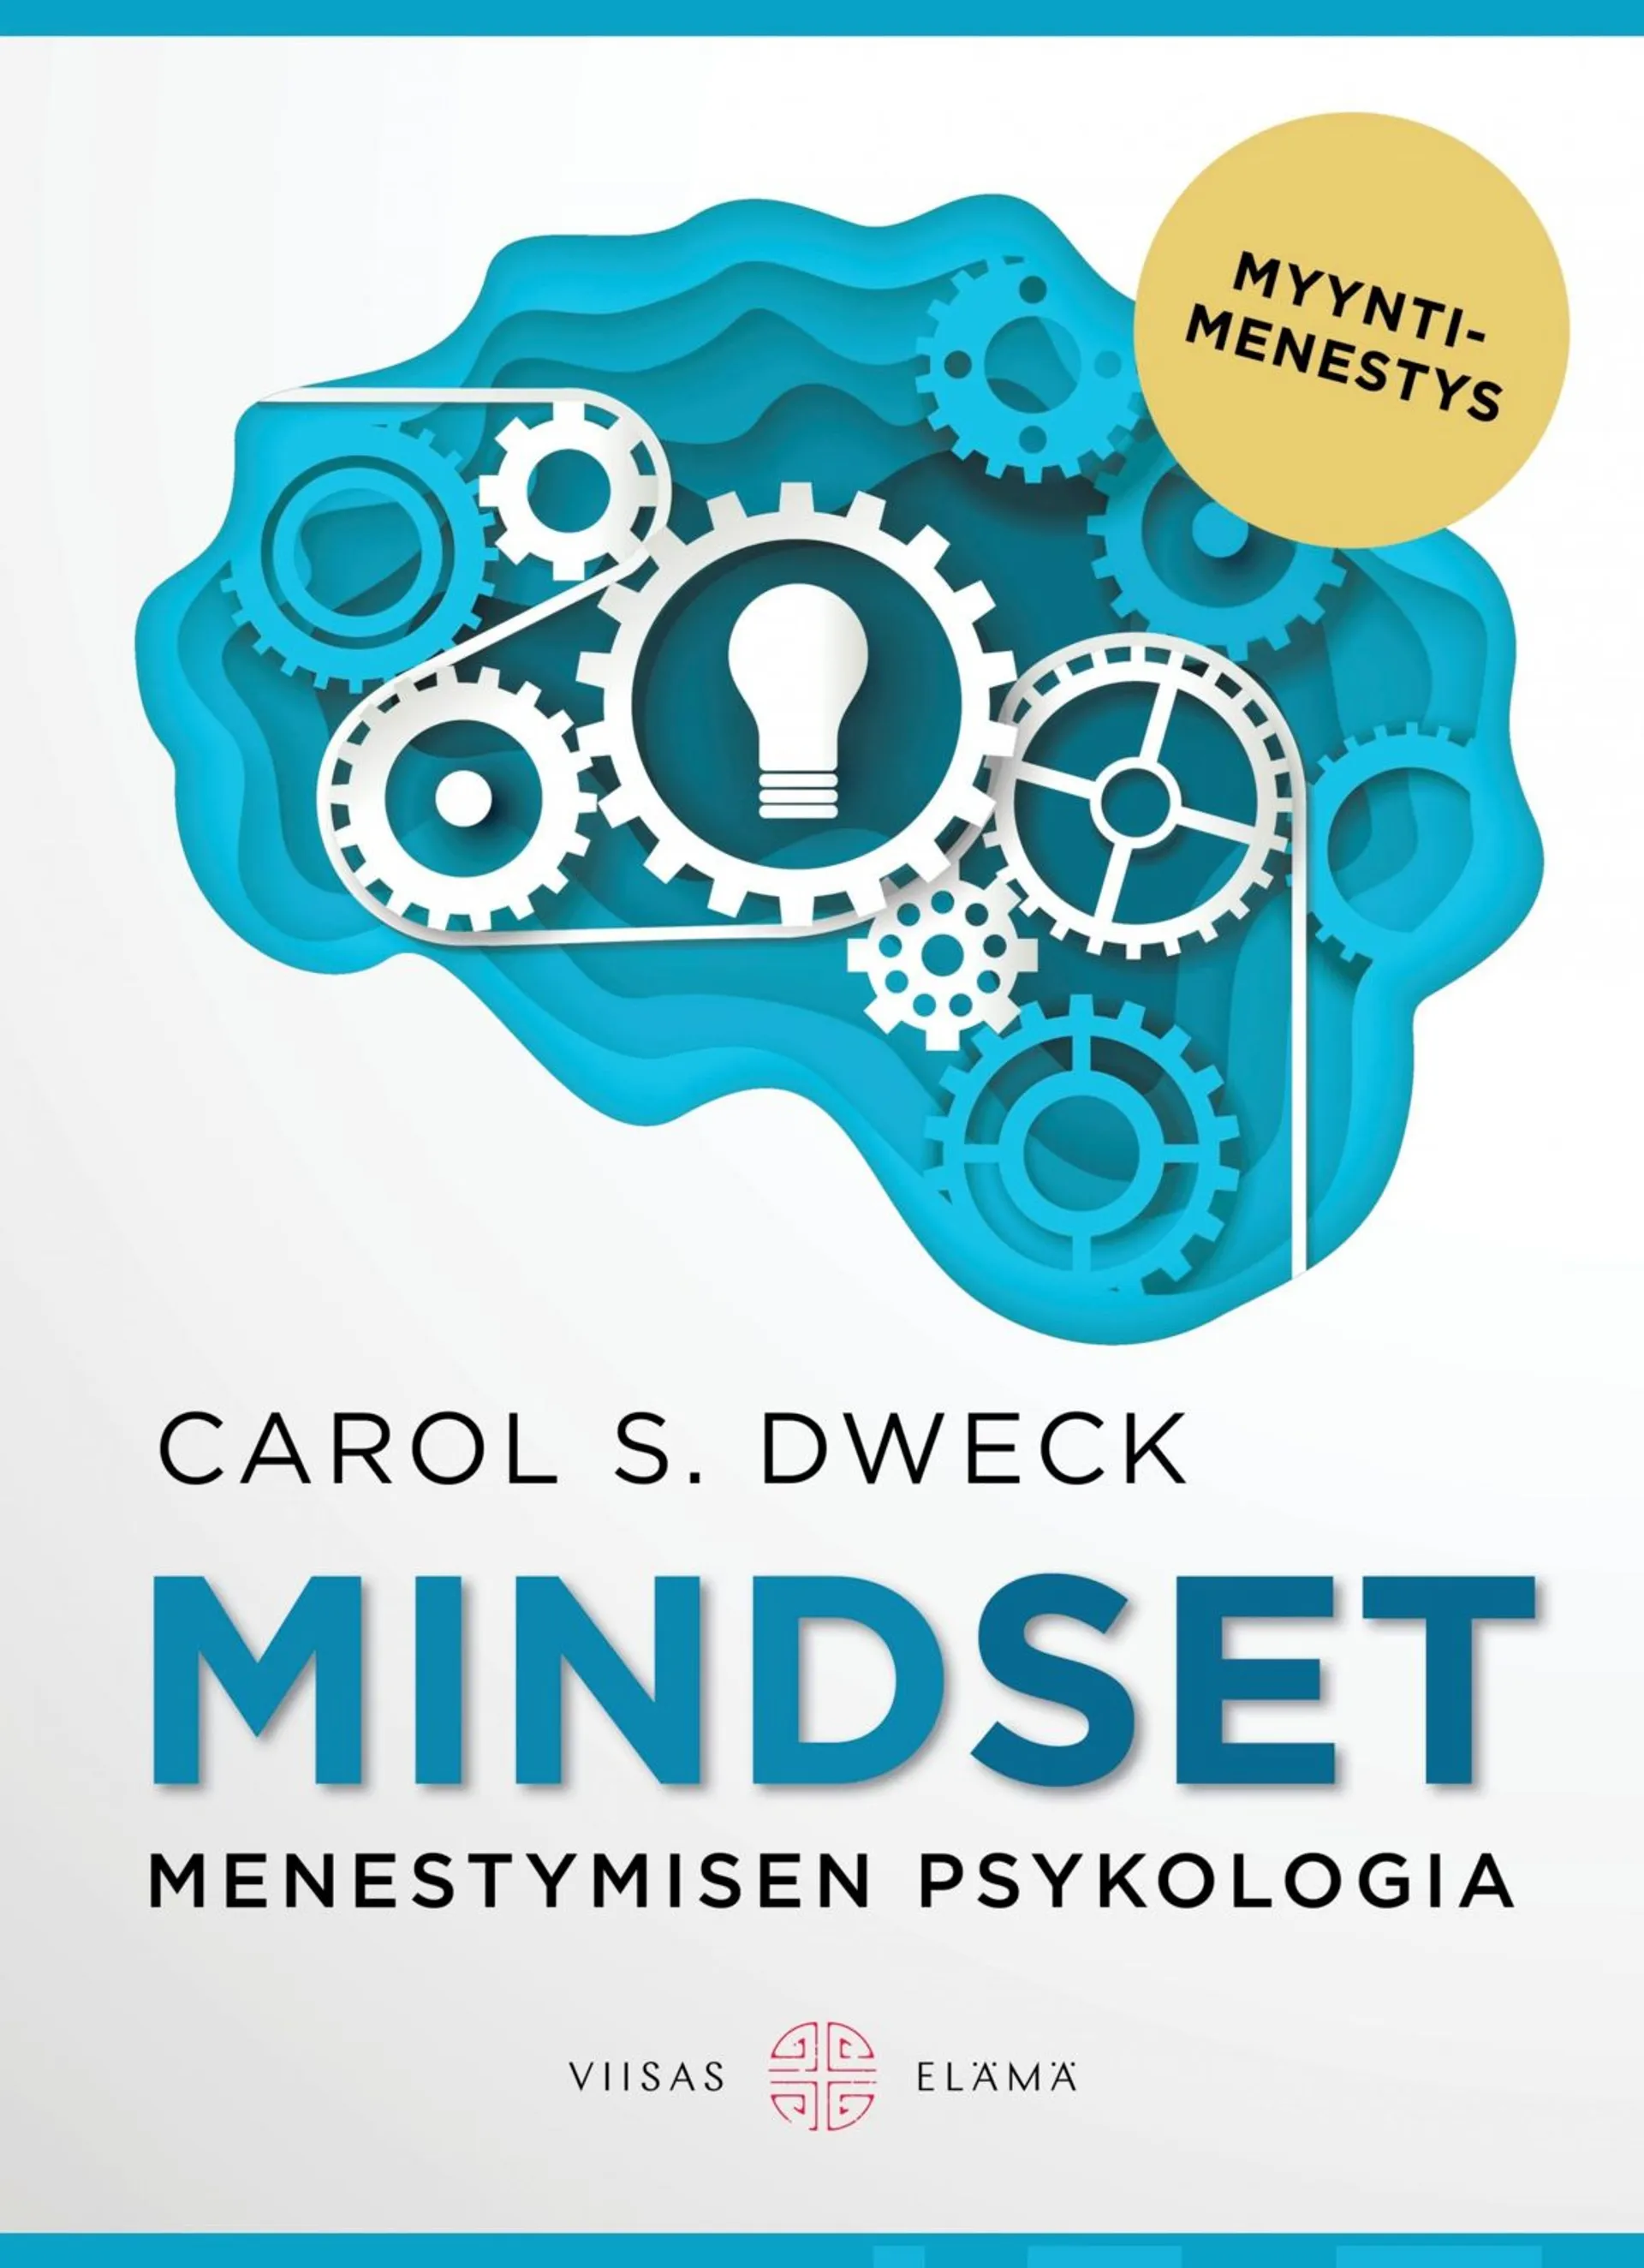 Dweck, Mindset - Menestymisen psykologia